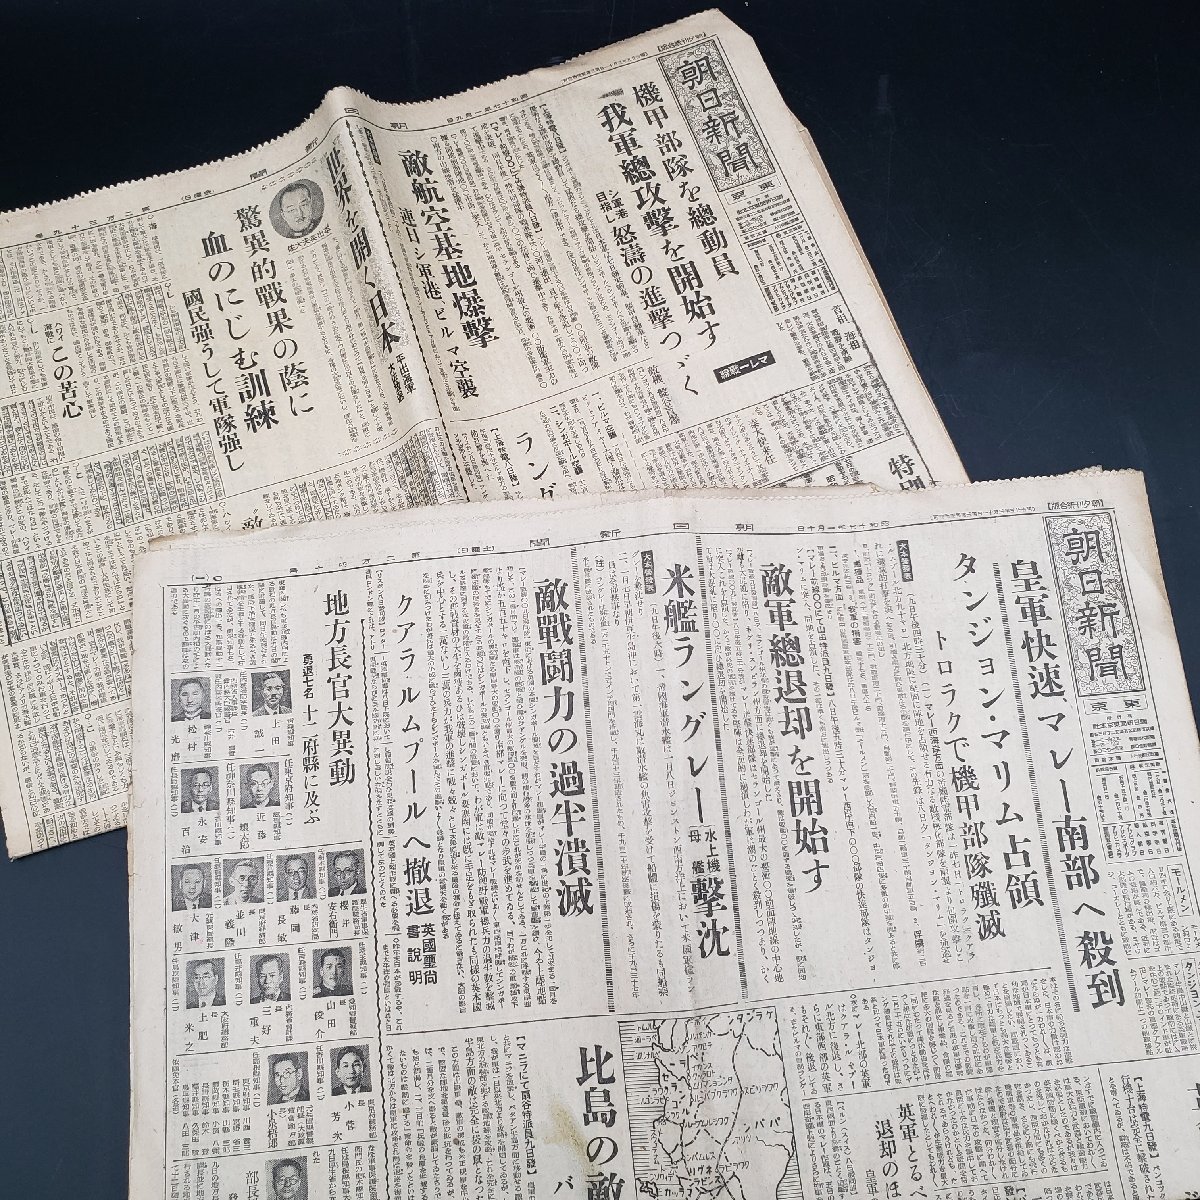  Showa 17.1/1~1/10 утро день газета жемчуг ... futoshi flat . война битва час средний война материалы милитари старый бумага старый газета Япония армия collector [60t2589]